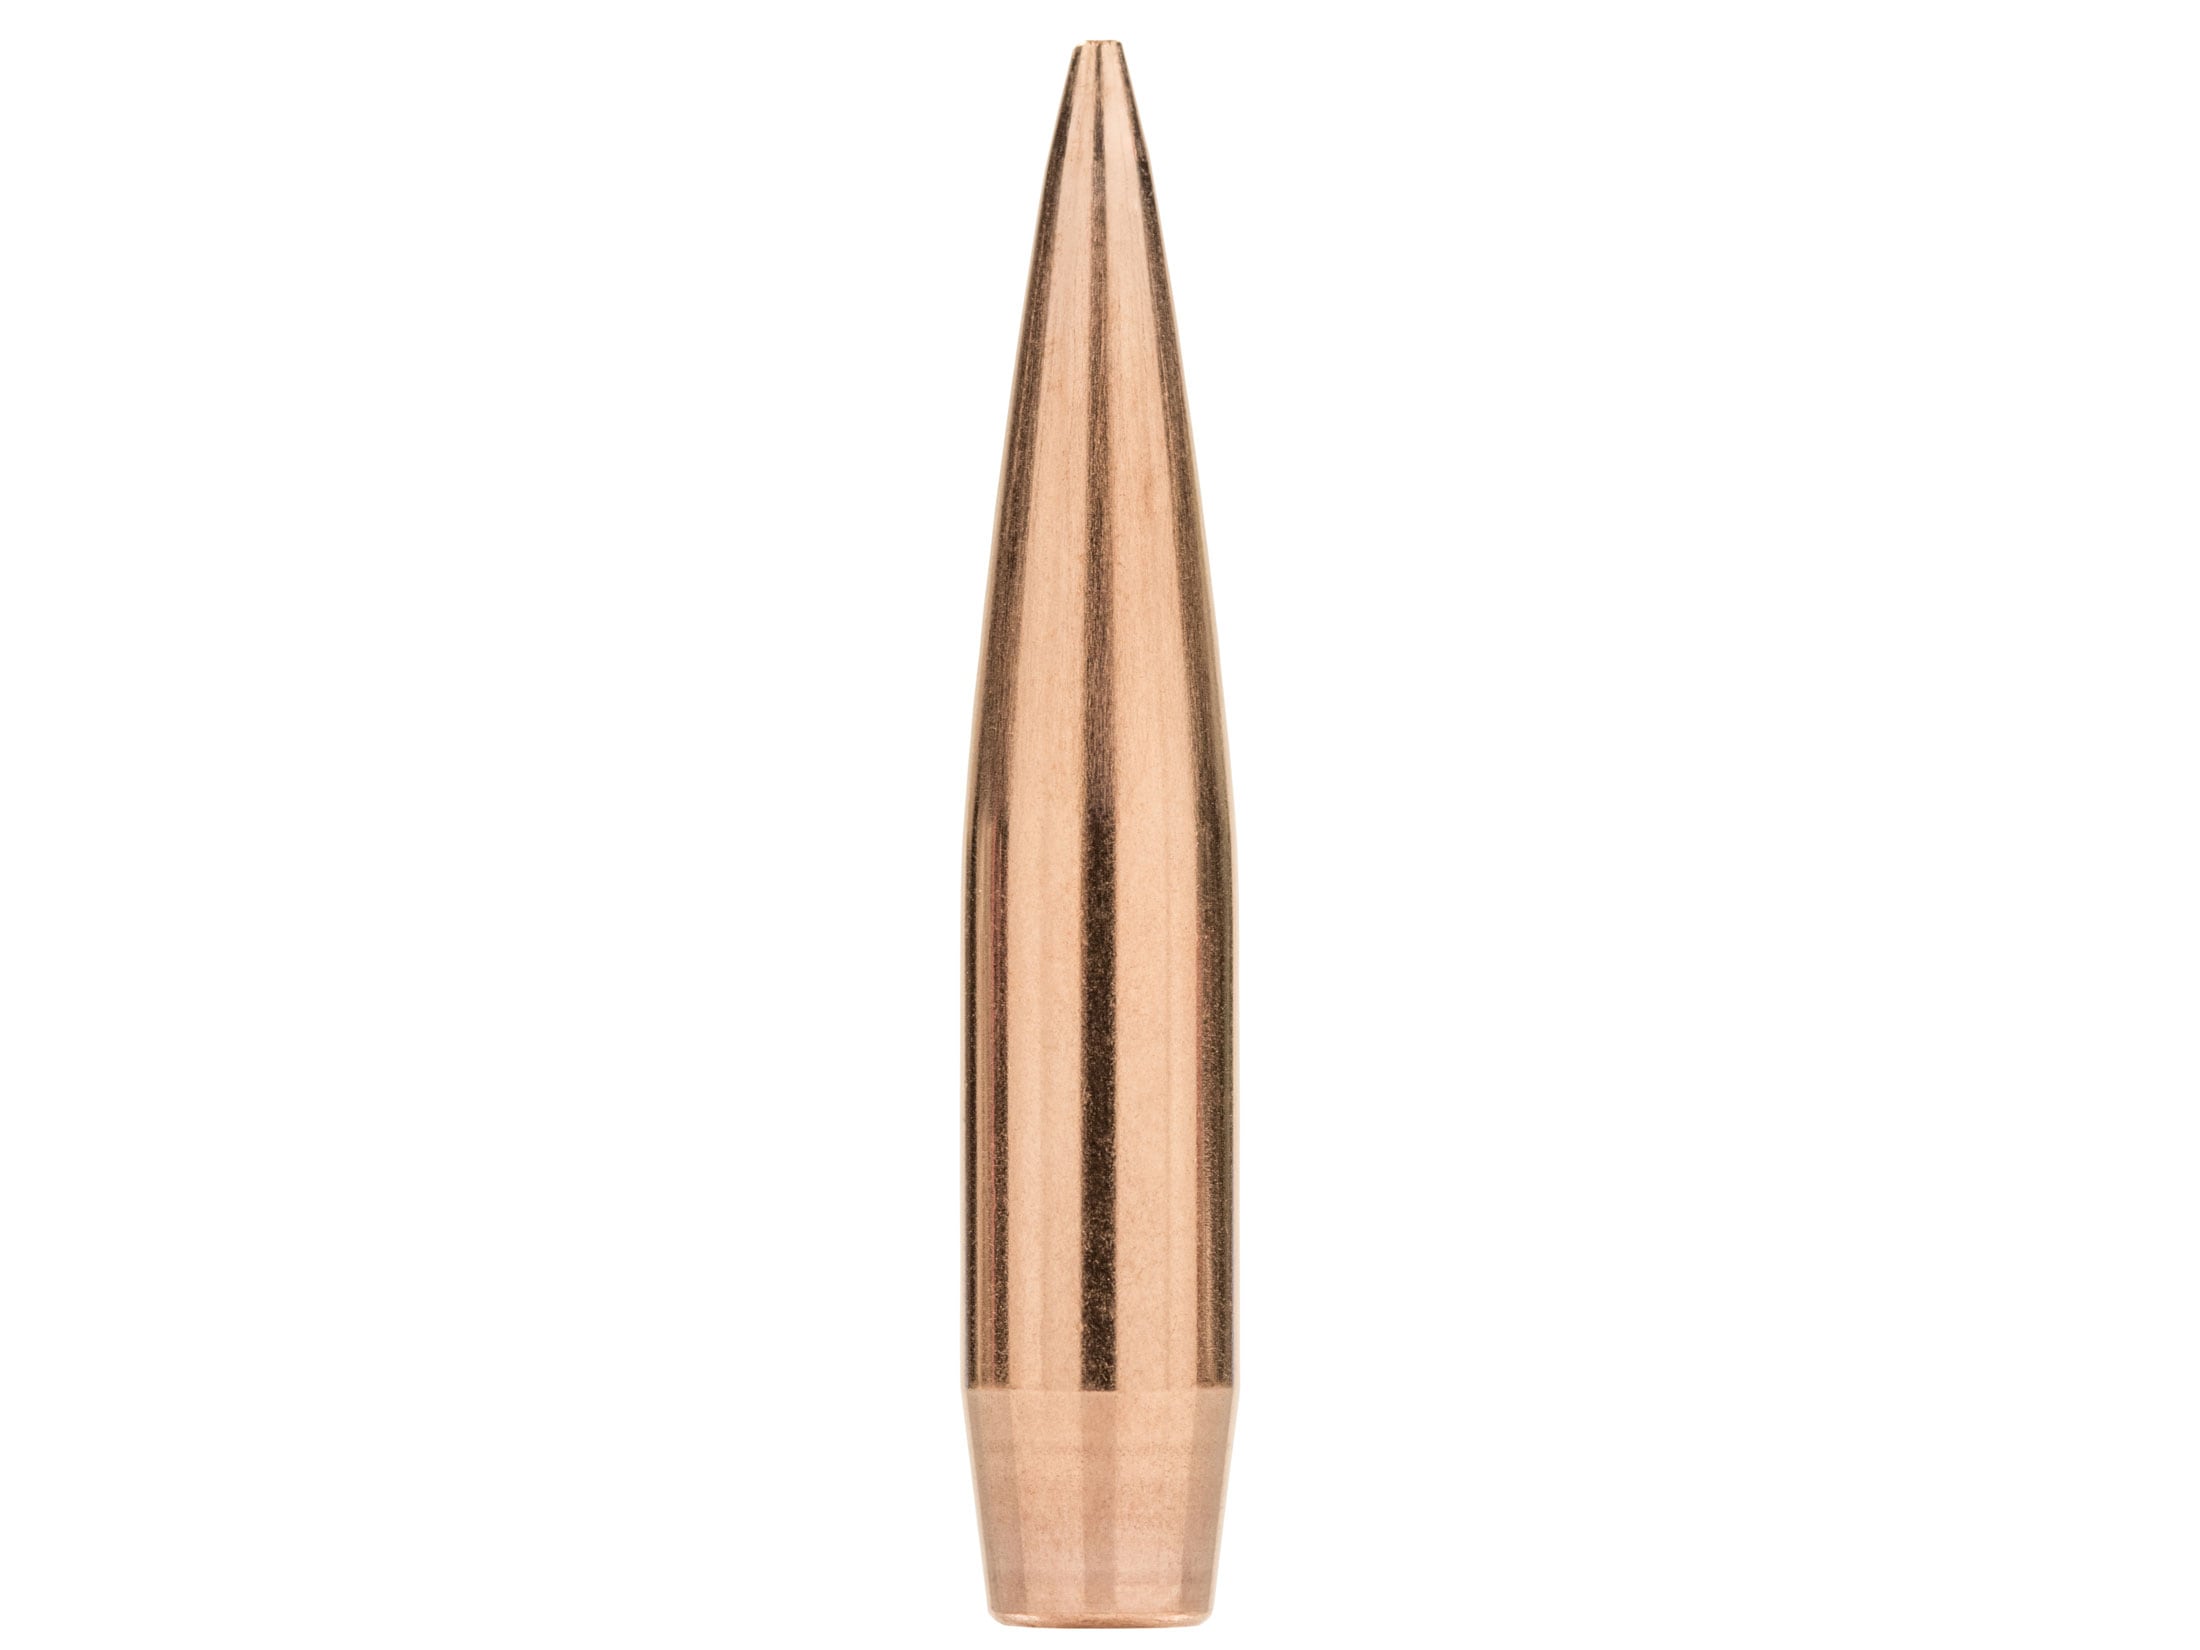 Sierra MatchKing Bullets 264 Caliber, 6.5mm (264 Diameter) 150 Grain Hollow Point Boat Tail